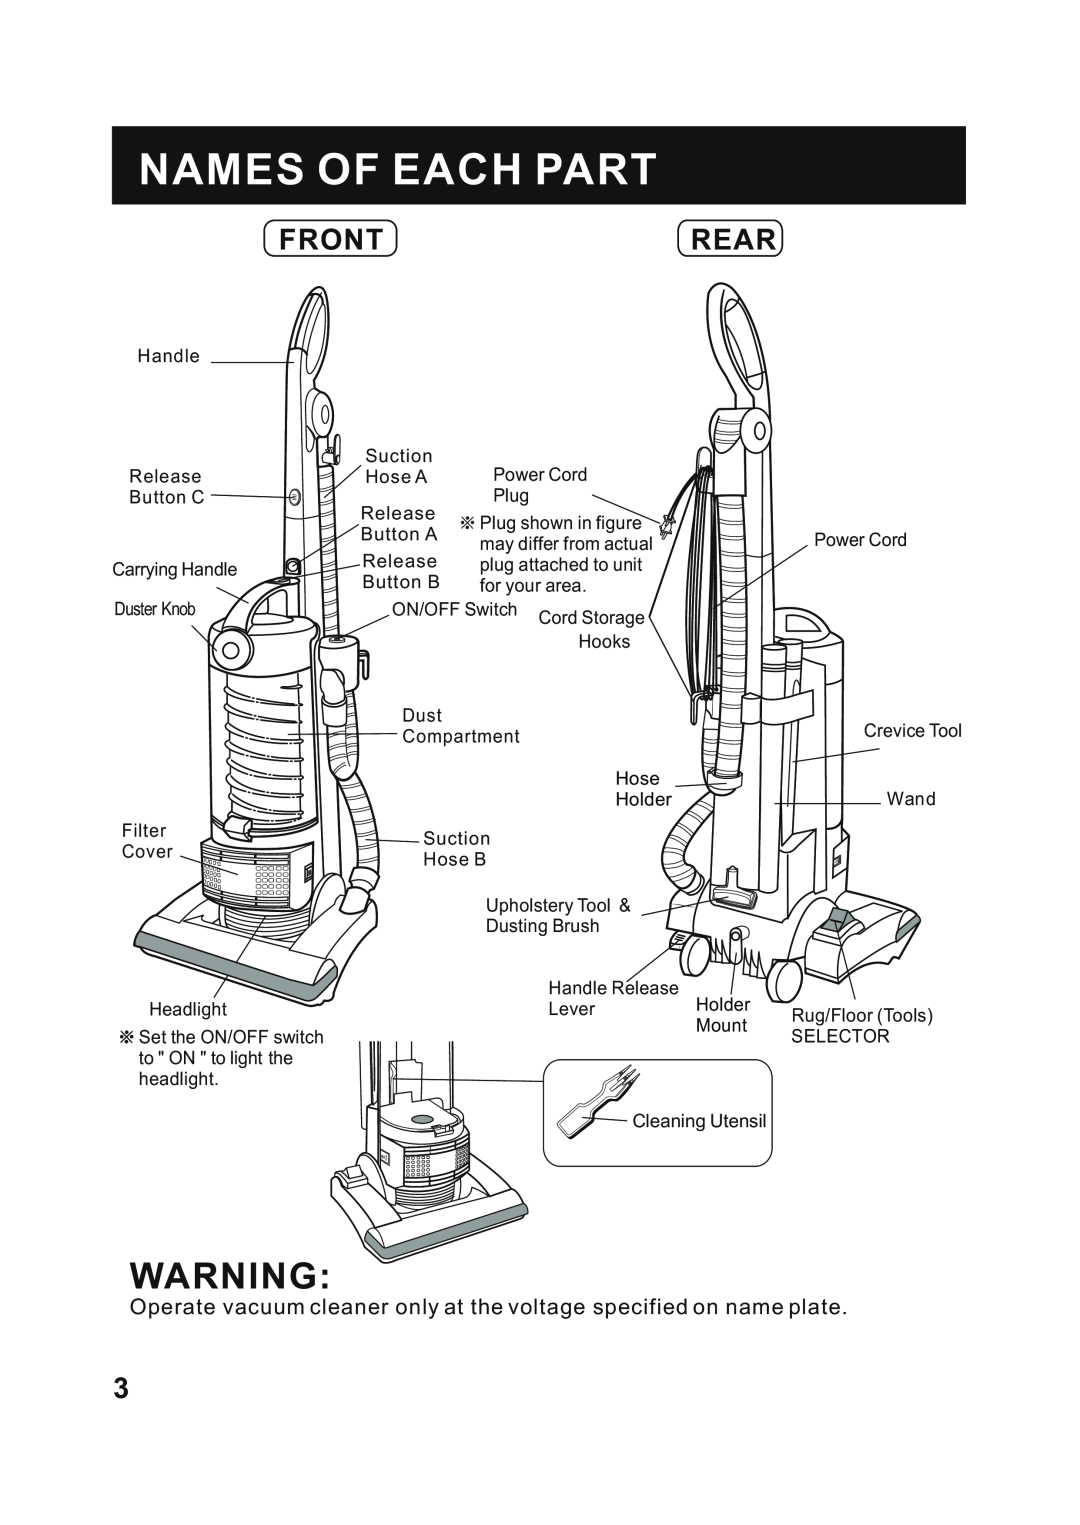 Fantom Vacuum FM741HR instruction manual Names Of Each Part, Frontrear 